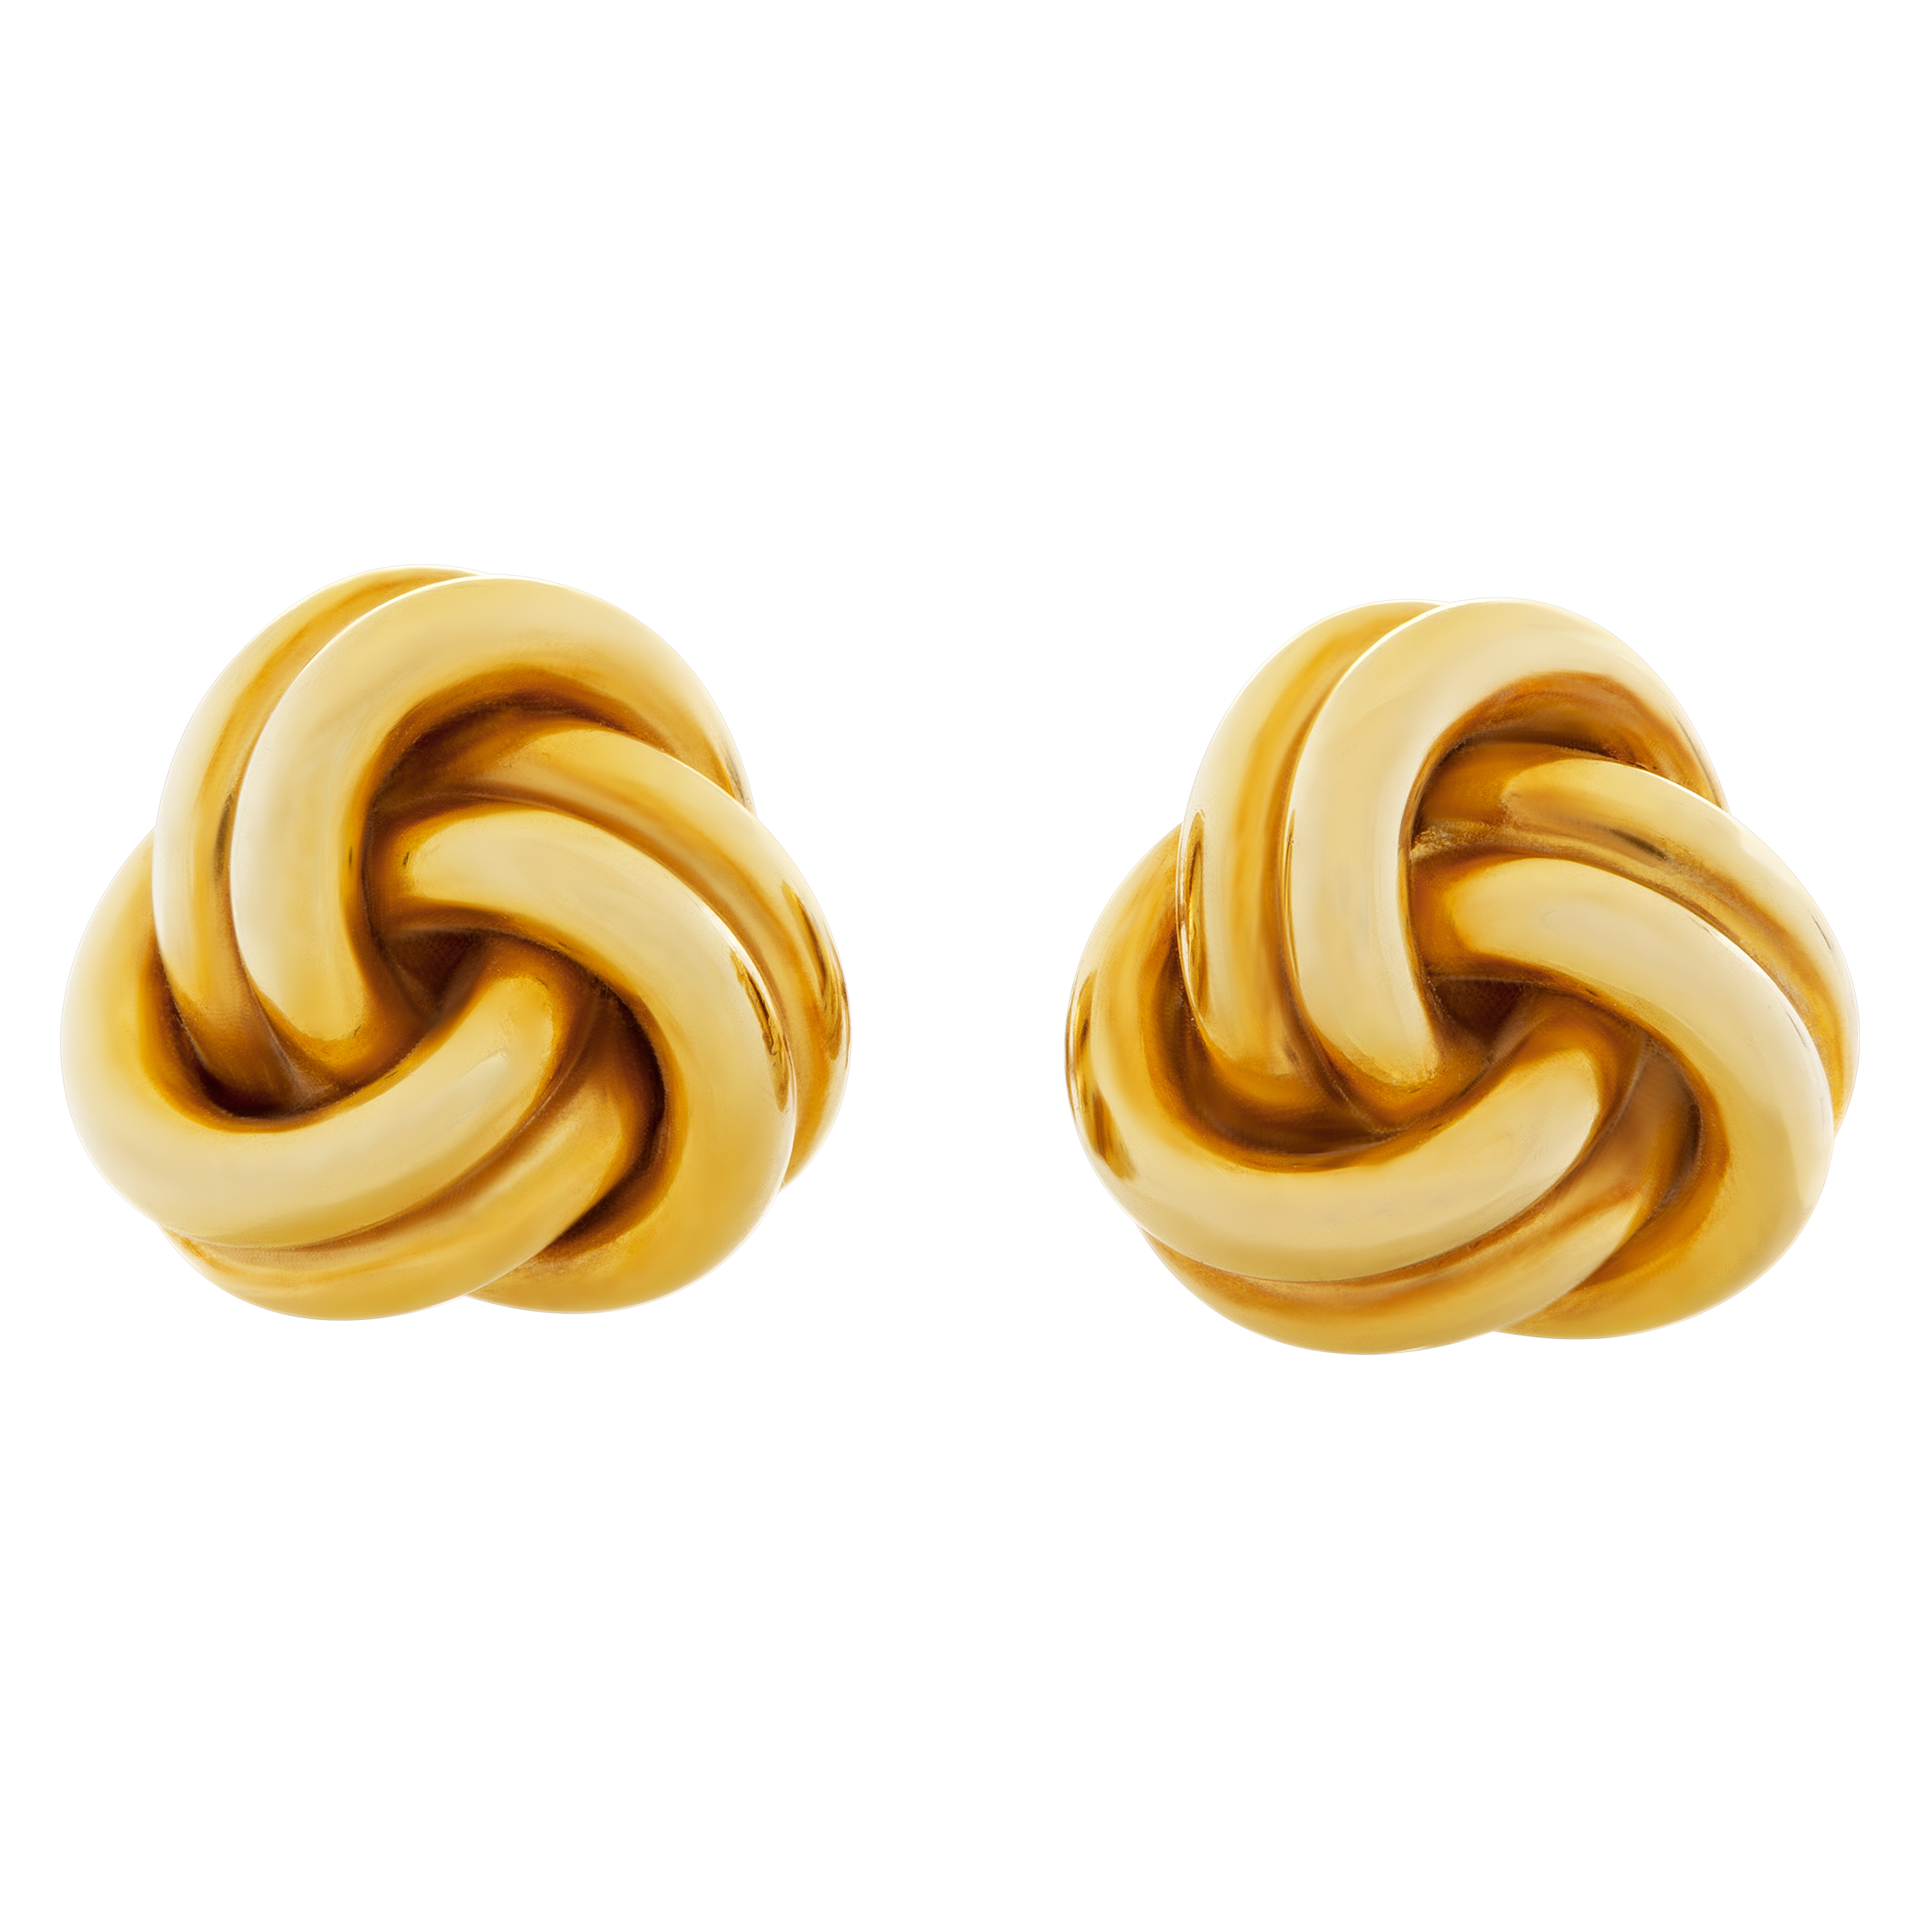 Tiffany & Co. Love Knot earrings in 18k yellow gold. 10mm diameter image 1